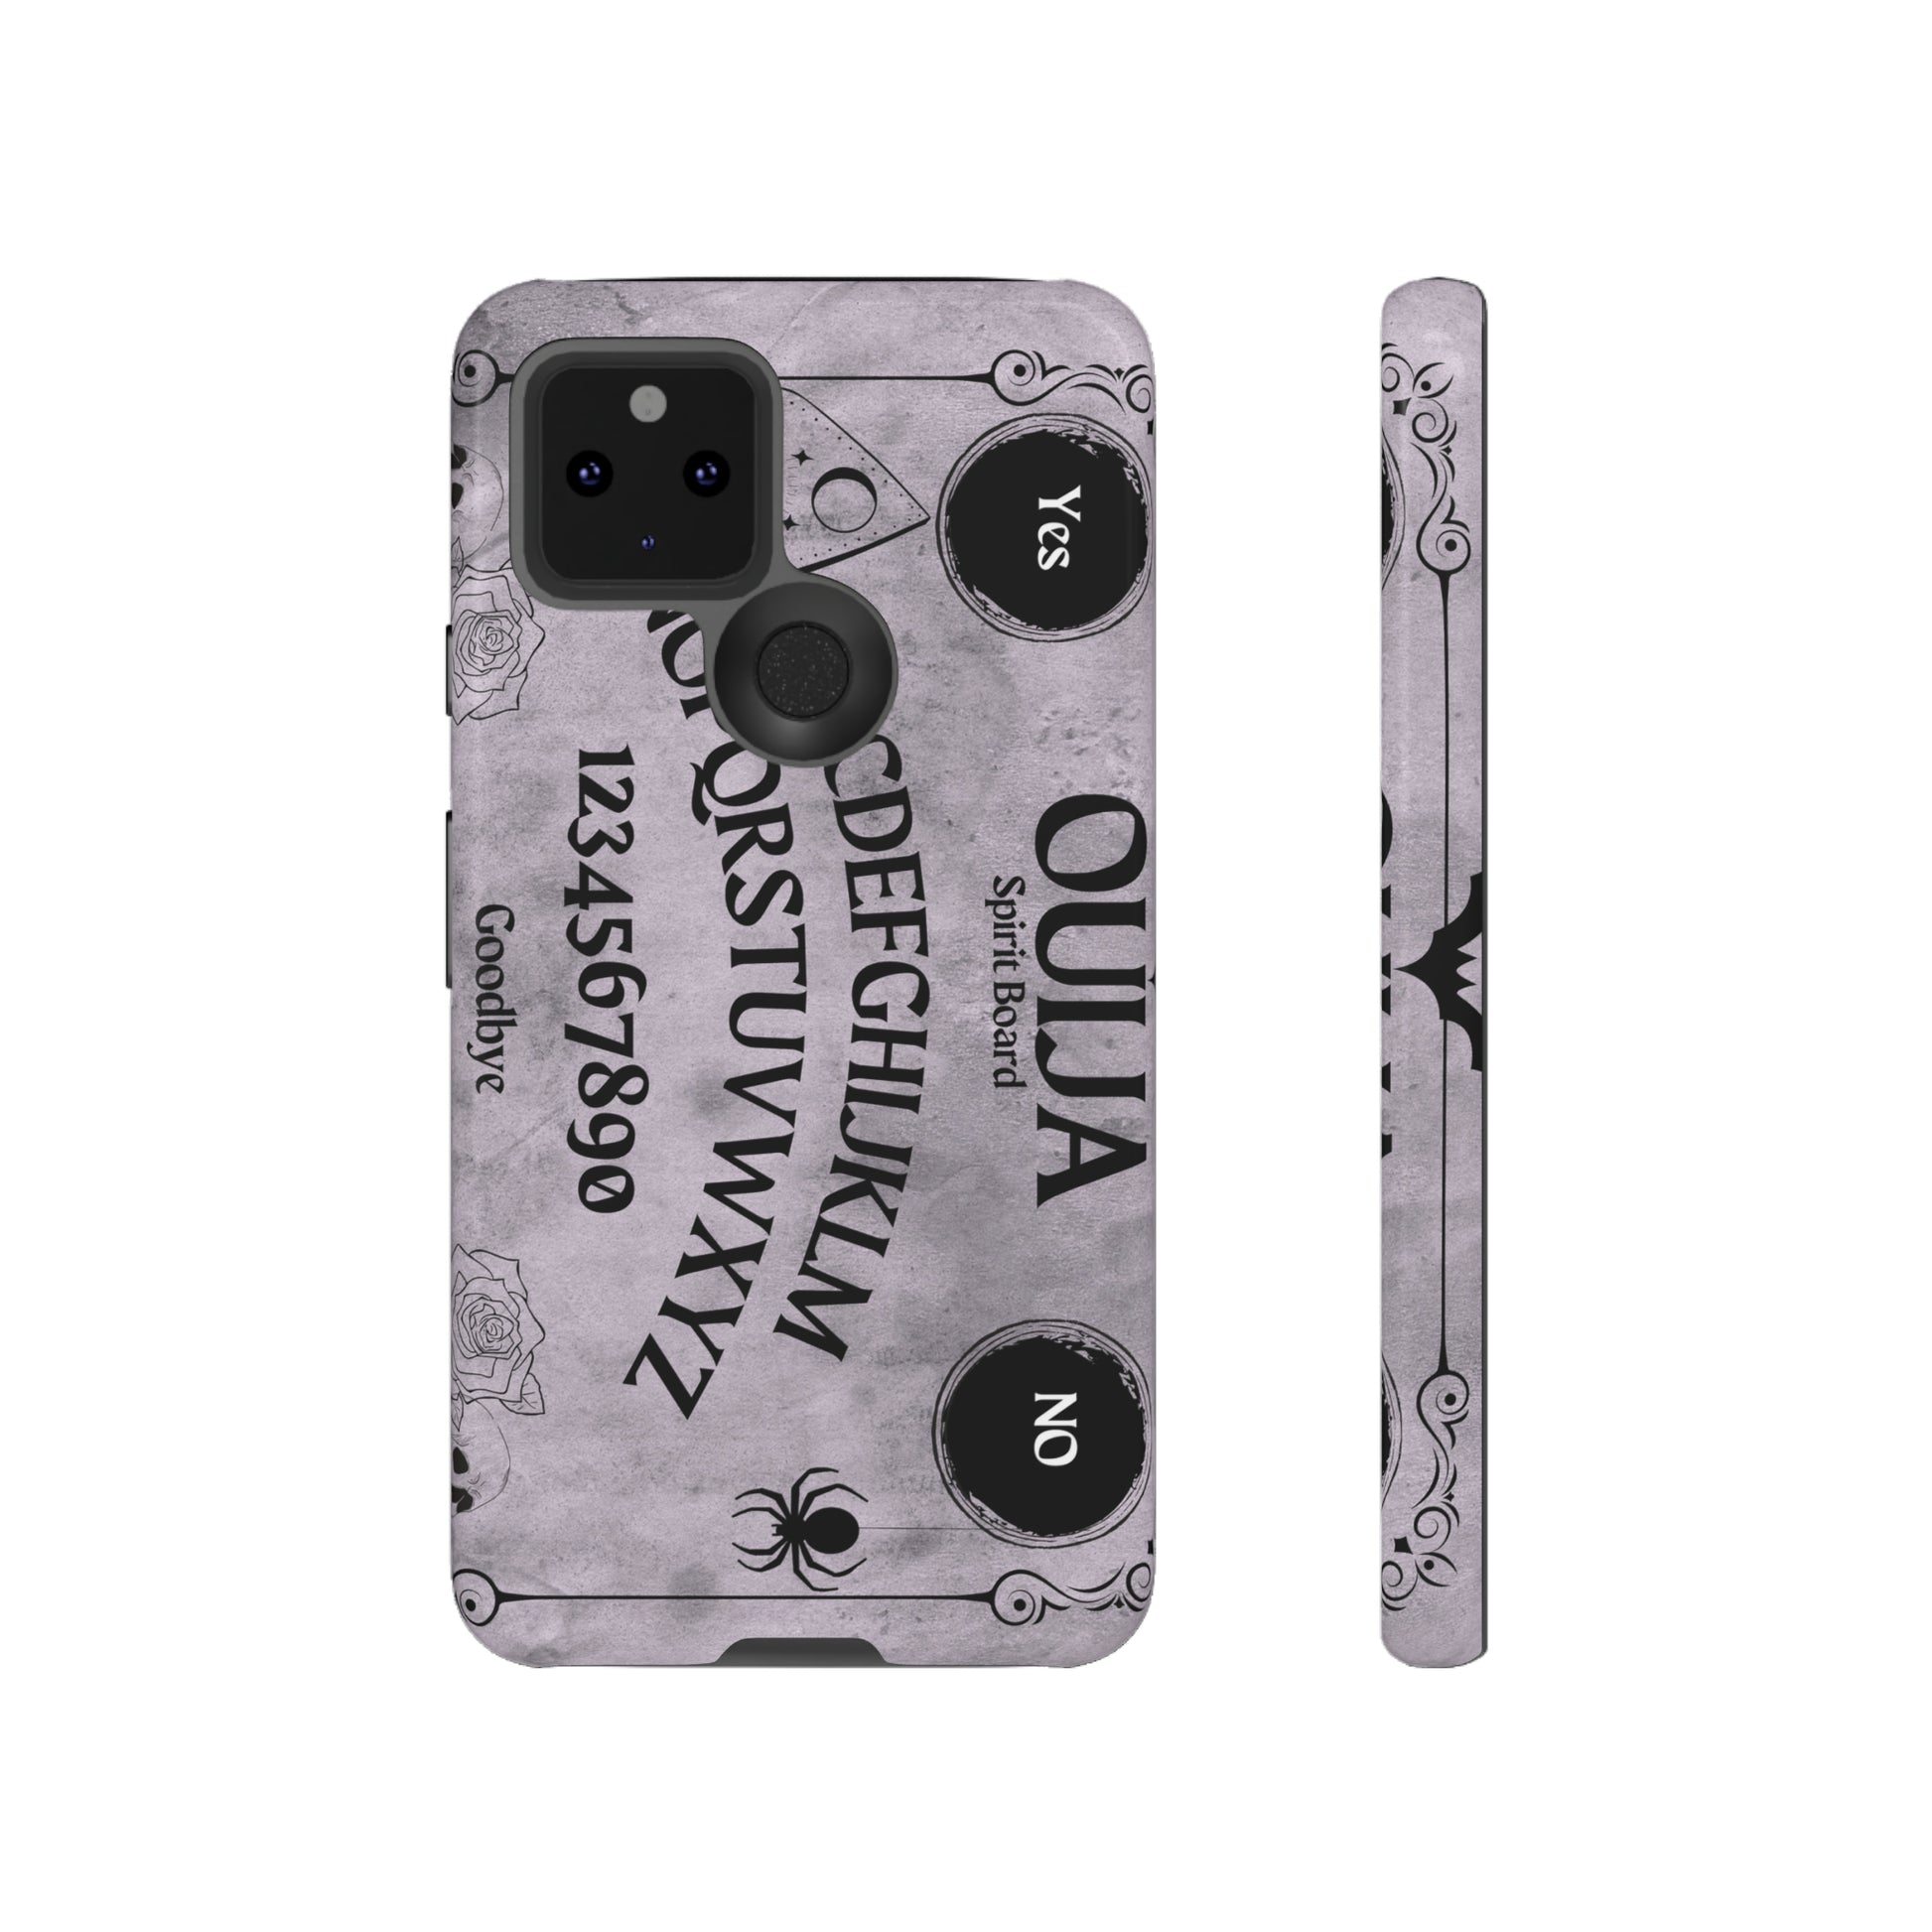 Ouija Board Tough Phone Cases For Samsung iPhone GooglePhone CaseVTZdesignsGoogle Pixel 5 5GGlossyAccessoriesGlossyhalloween